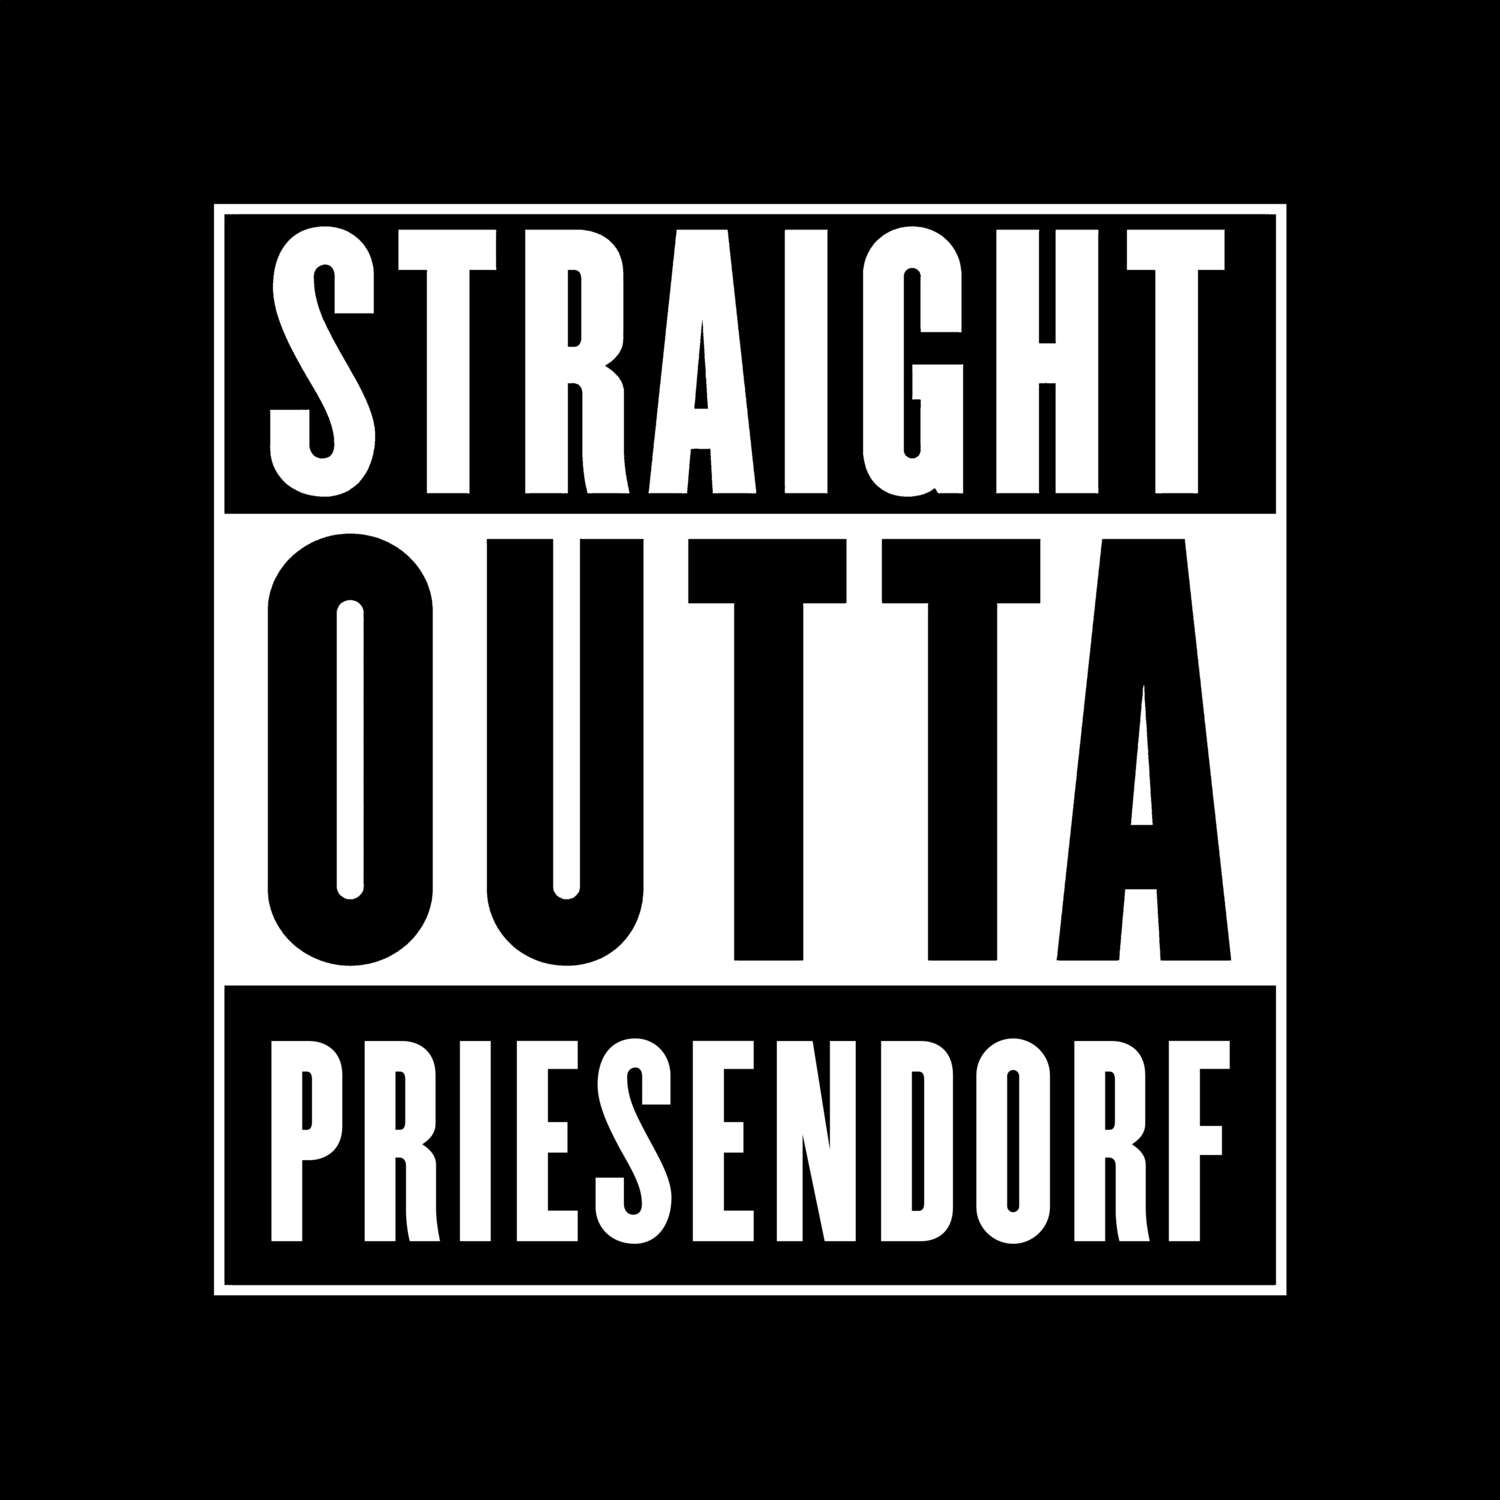 Priesendorf T-Shirt »Straight Outta«